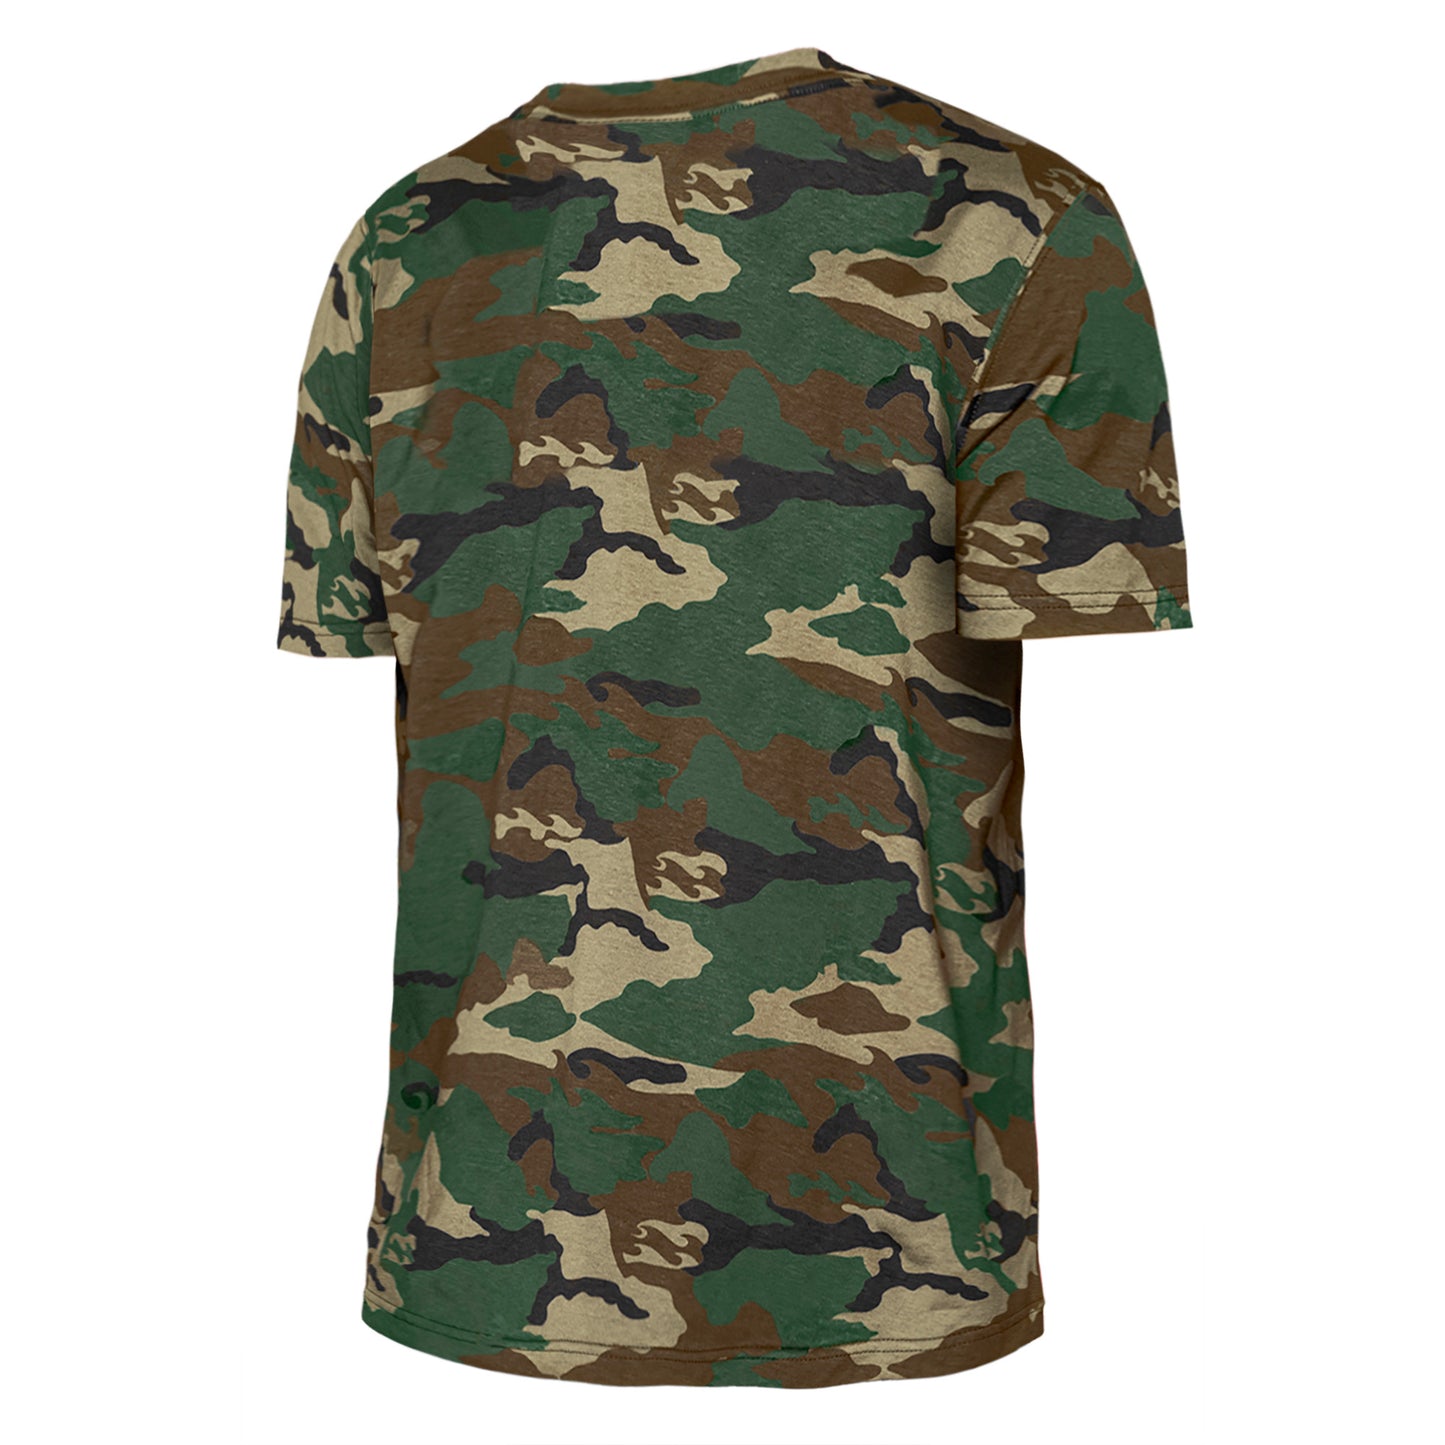 Los Angeles Dodgers Alpha Industries Camo Short Sleeve tee Shirt Olive/Camo